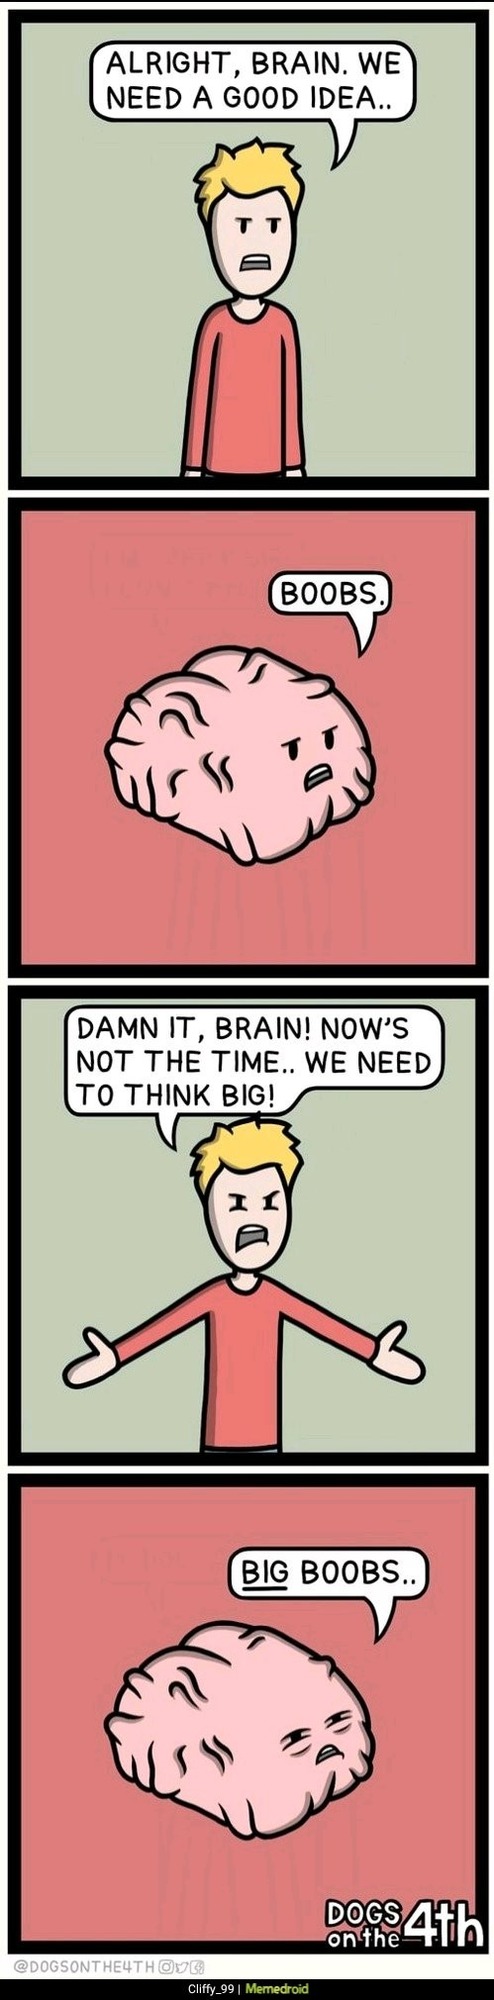 Brain - meme